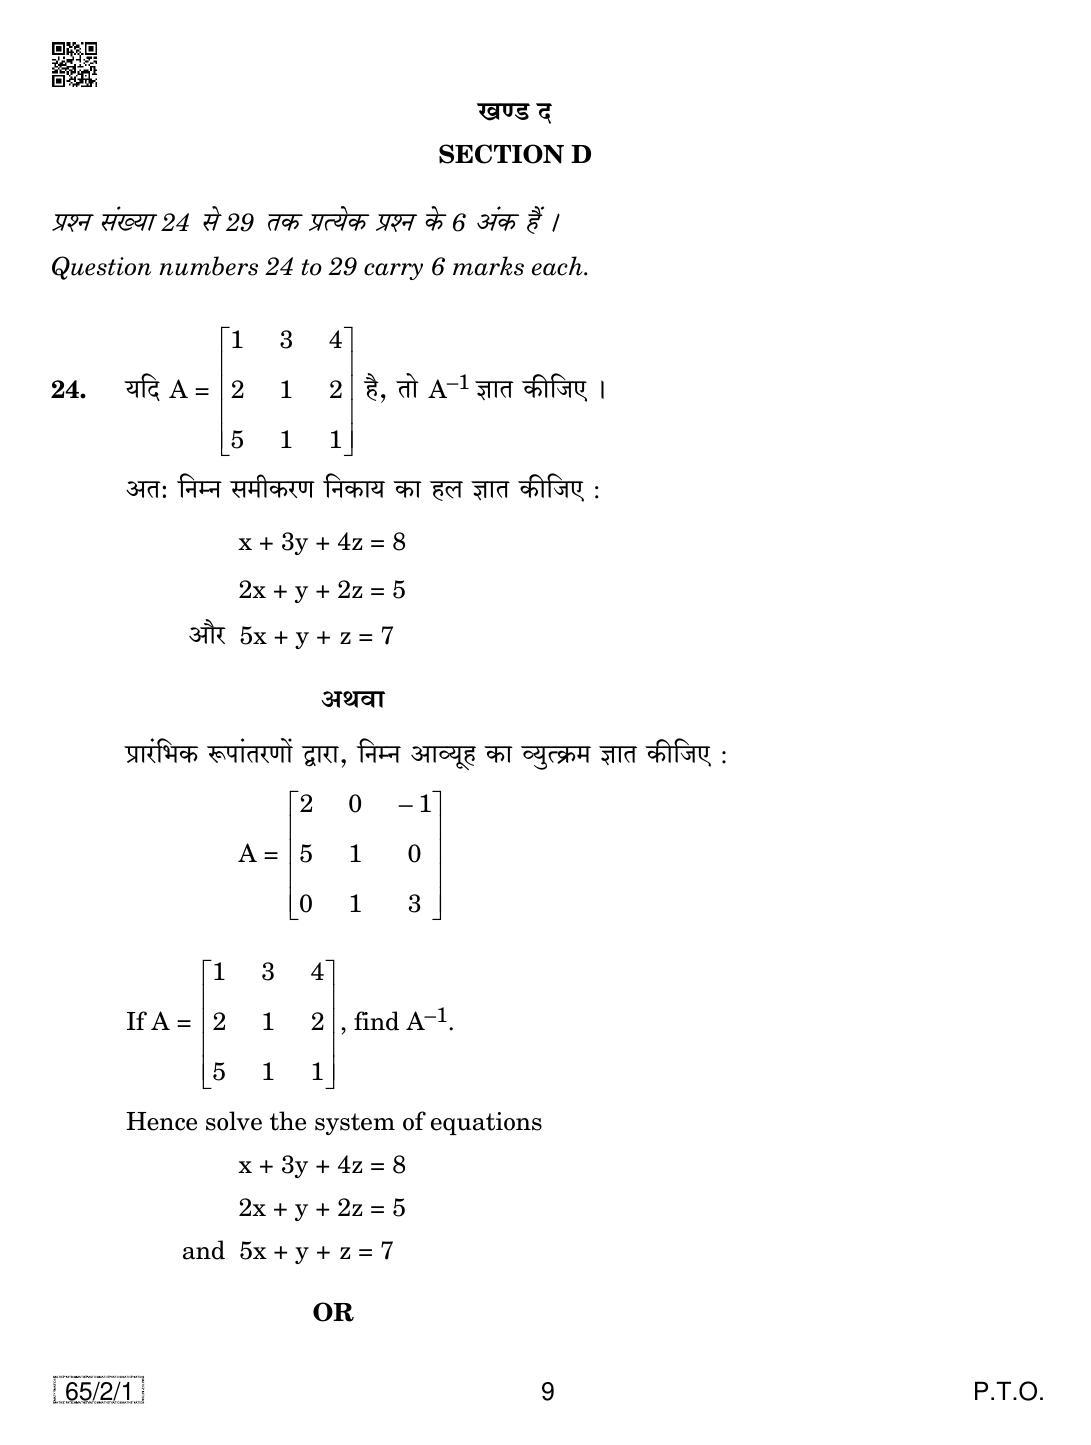 CBSE Class 12 65-2-1 Mathematics 2019 Question Paper - Page 9